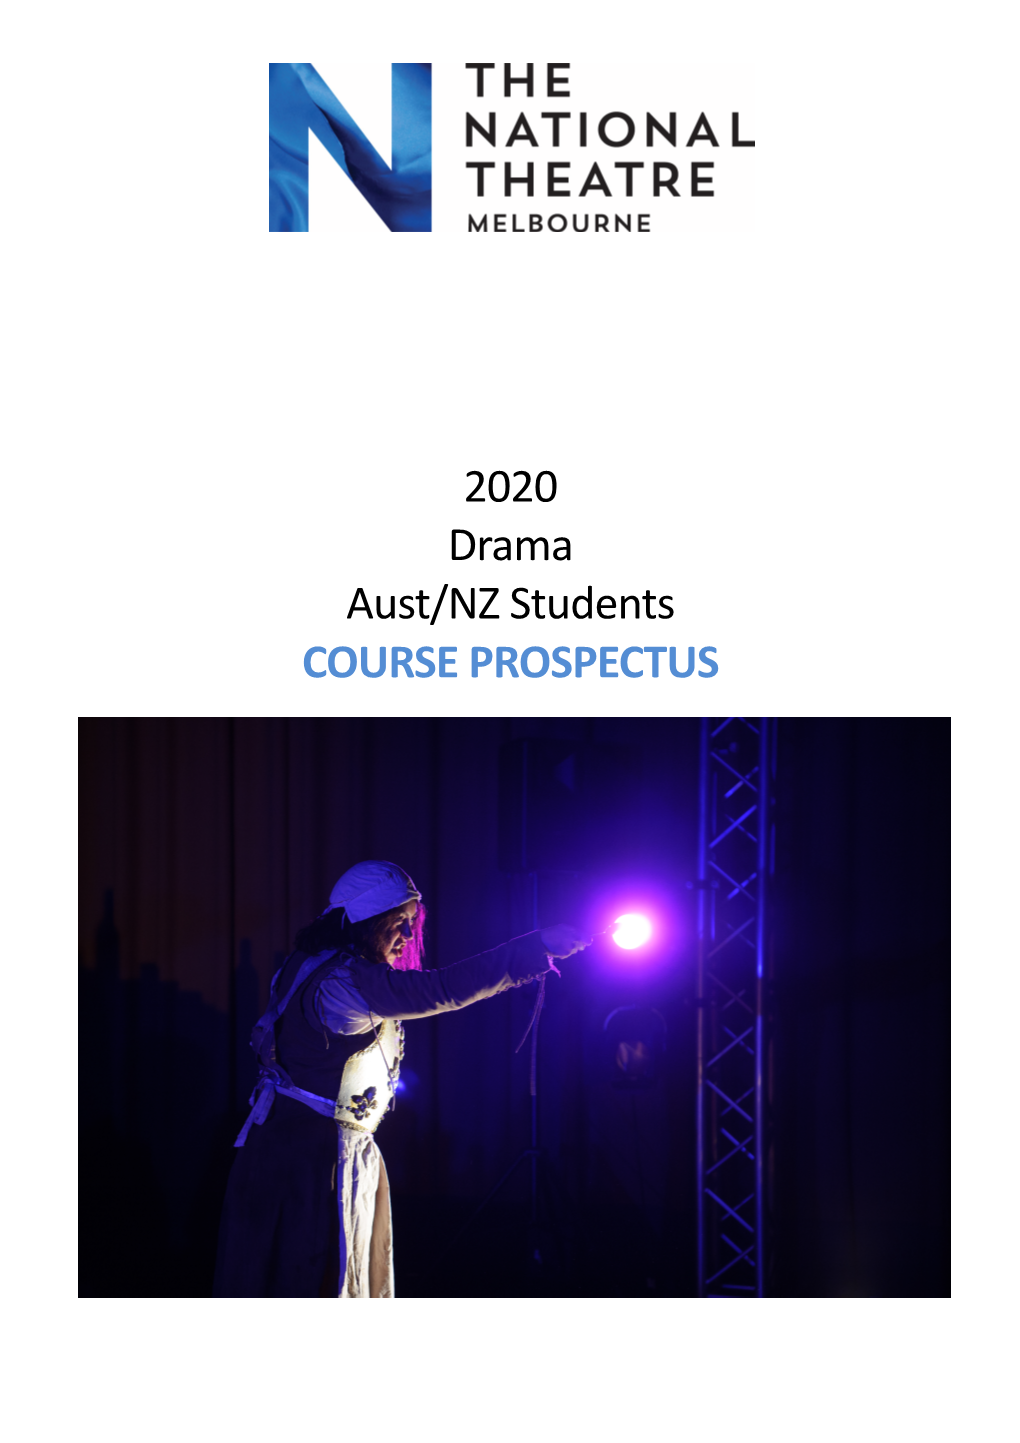 NT Drama Prospectus AUS-NZ 2020 V2 130819